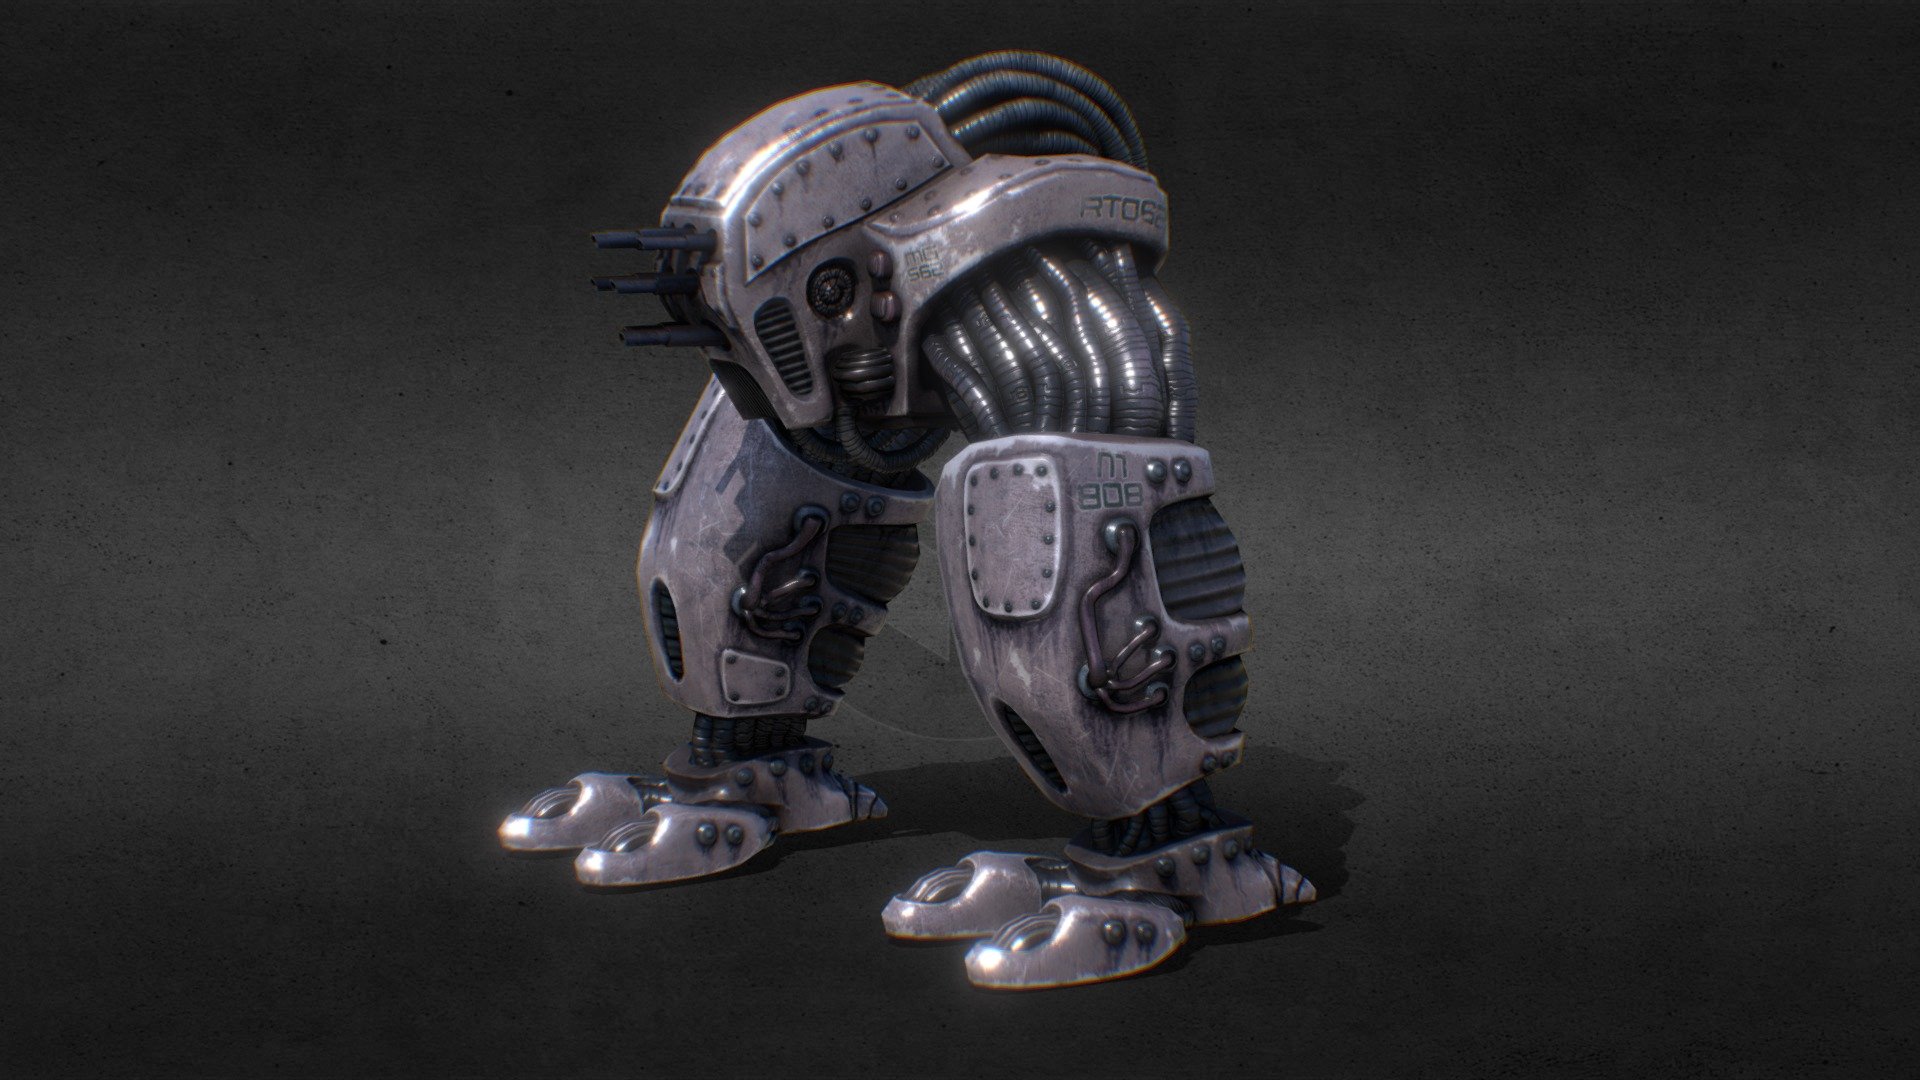 Machinegun-head - model from Dead Cyborg game